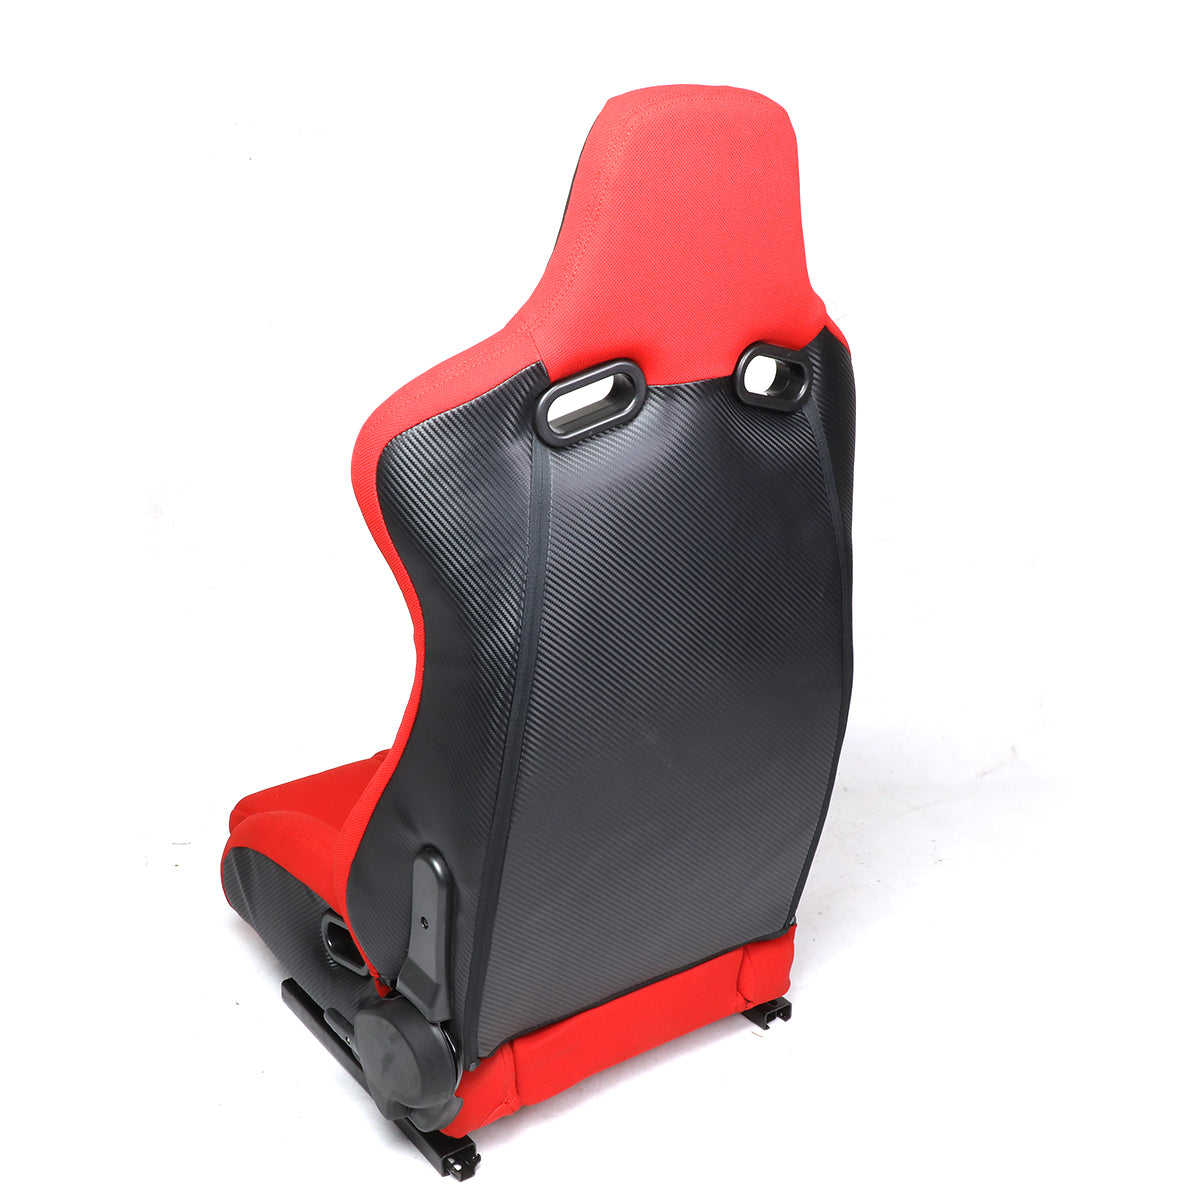 Racing Seats - Reclinable - Leather High Head - Carbon Fiber Design - Pair